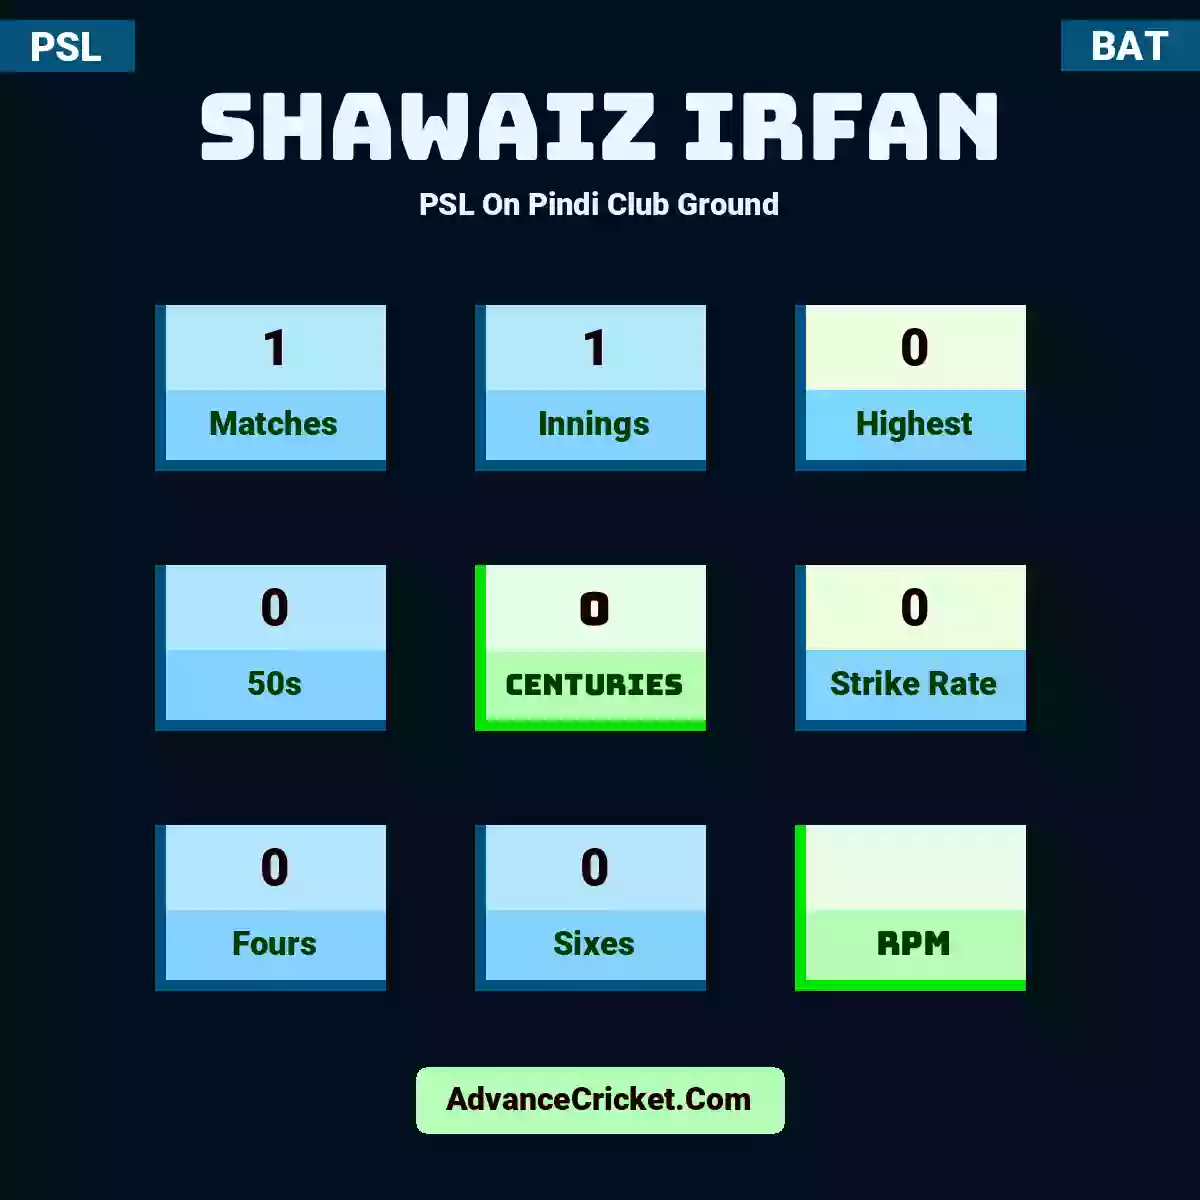 Shawaiz Irfan PSL  On Pindi Club Ground, Shawaiz Irfan played 1 matches, scored 0 runs as highest, 0 half-centuries, and 0 centuries, with a strike rate of 0. S.Irfan hit 0 fours and 0 sixes.